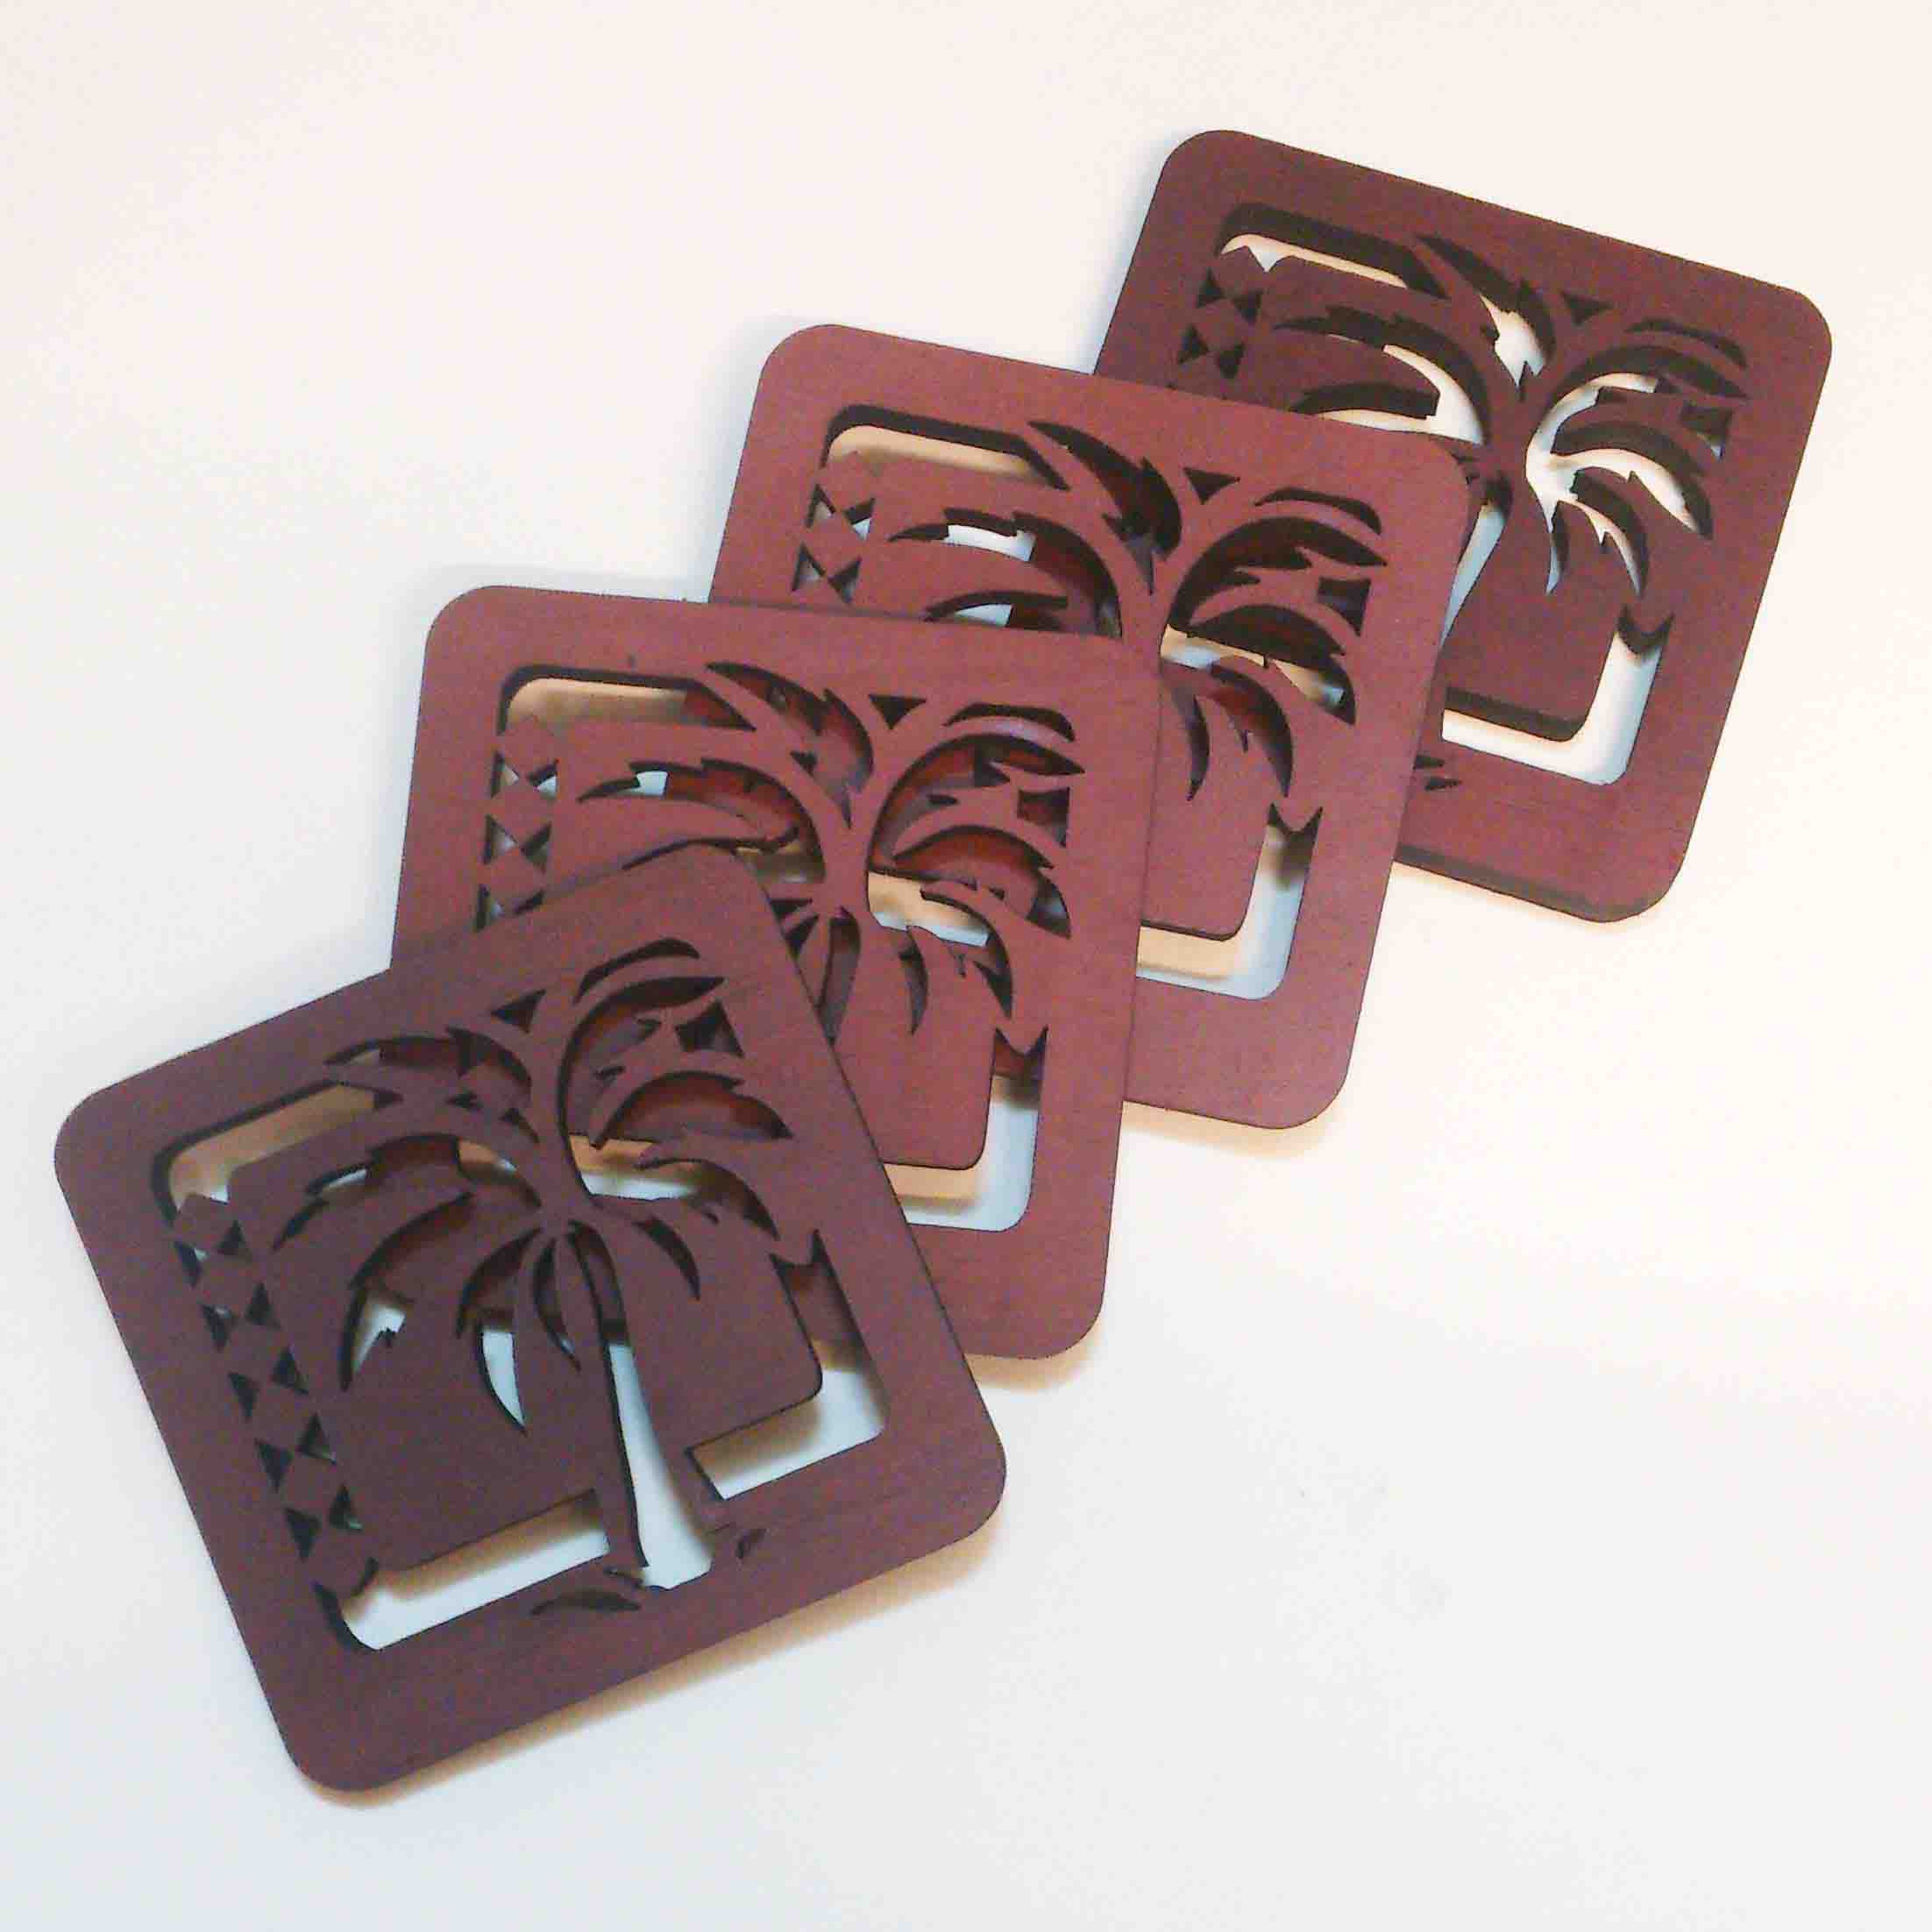 yLb`zLaser Engraved Wood Coasters - Palm Tree/EbhR[X^[ p[c[4Zbg^nCAG݁^Lb`pi^H